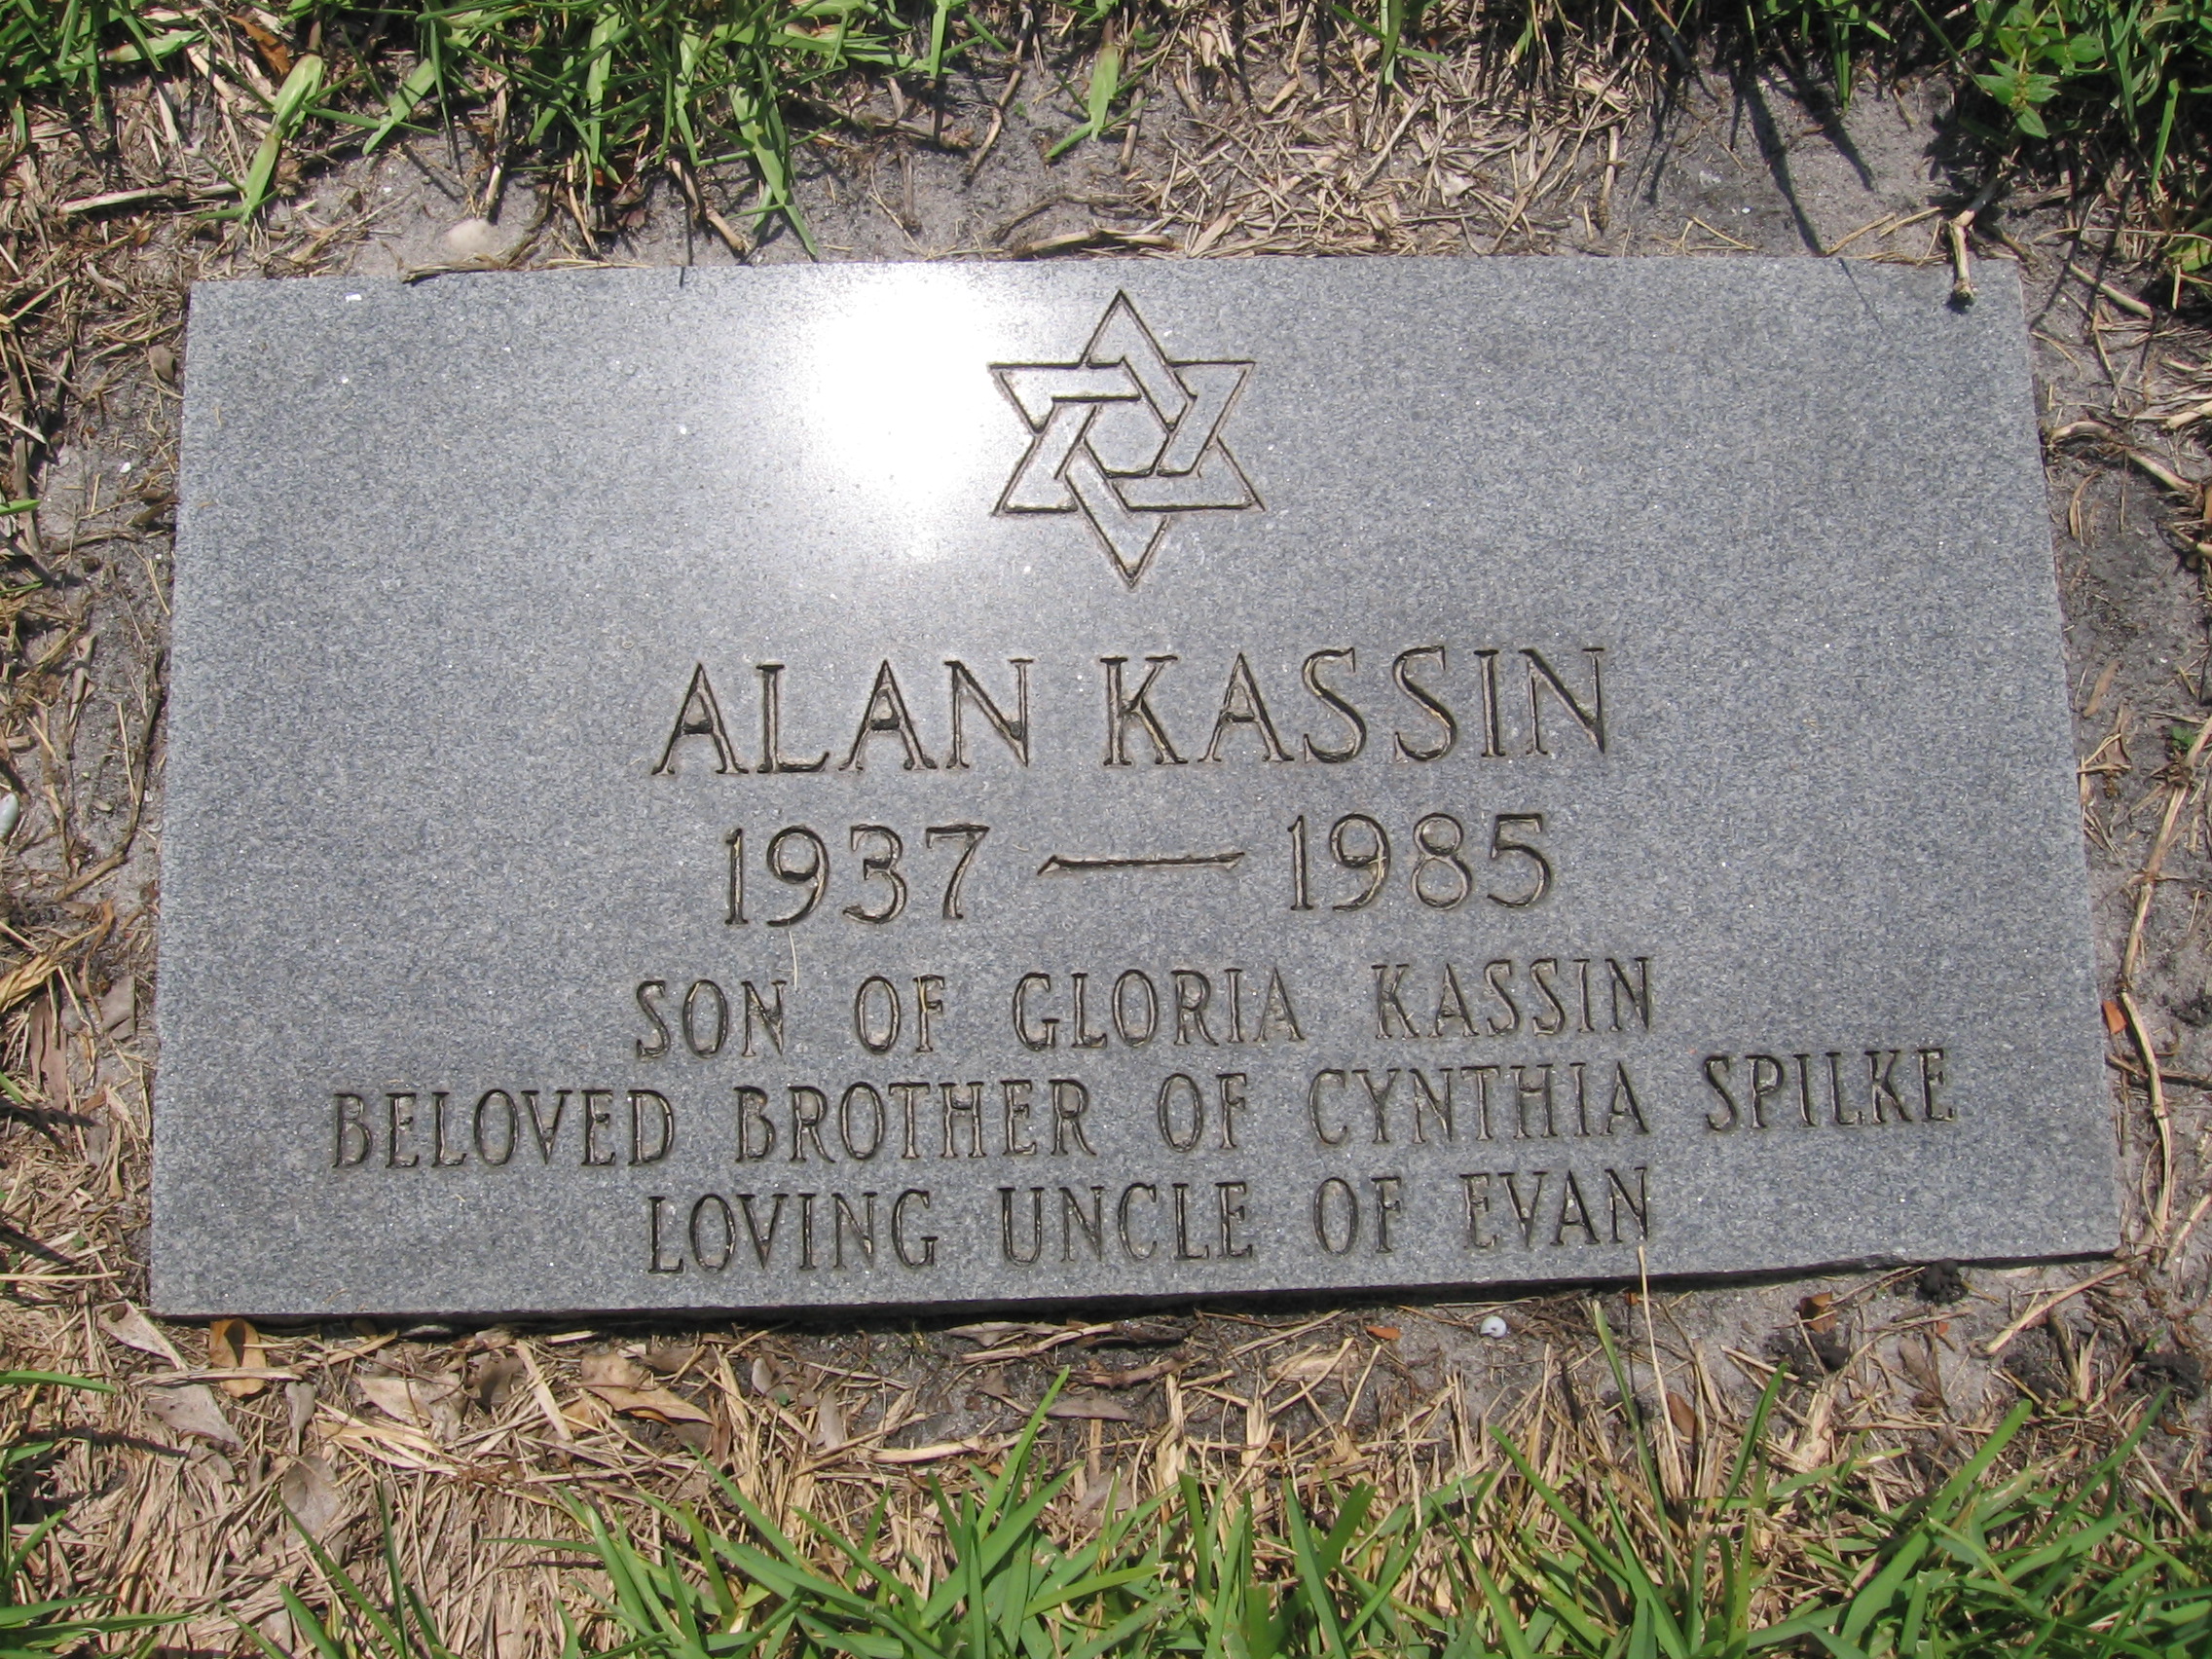 Alan Kassin